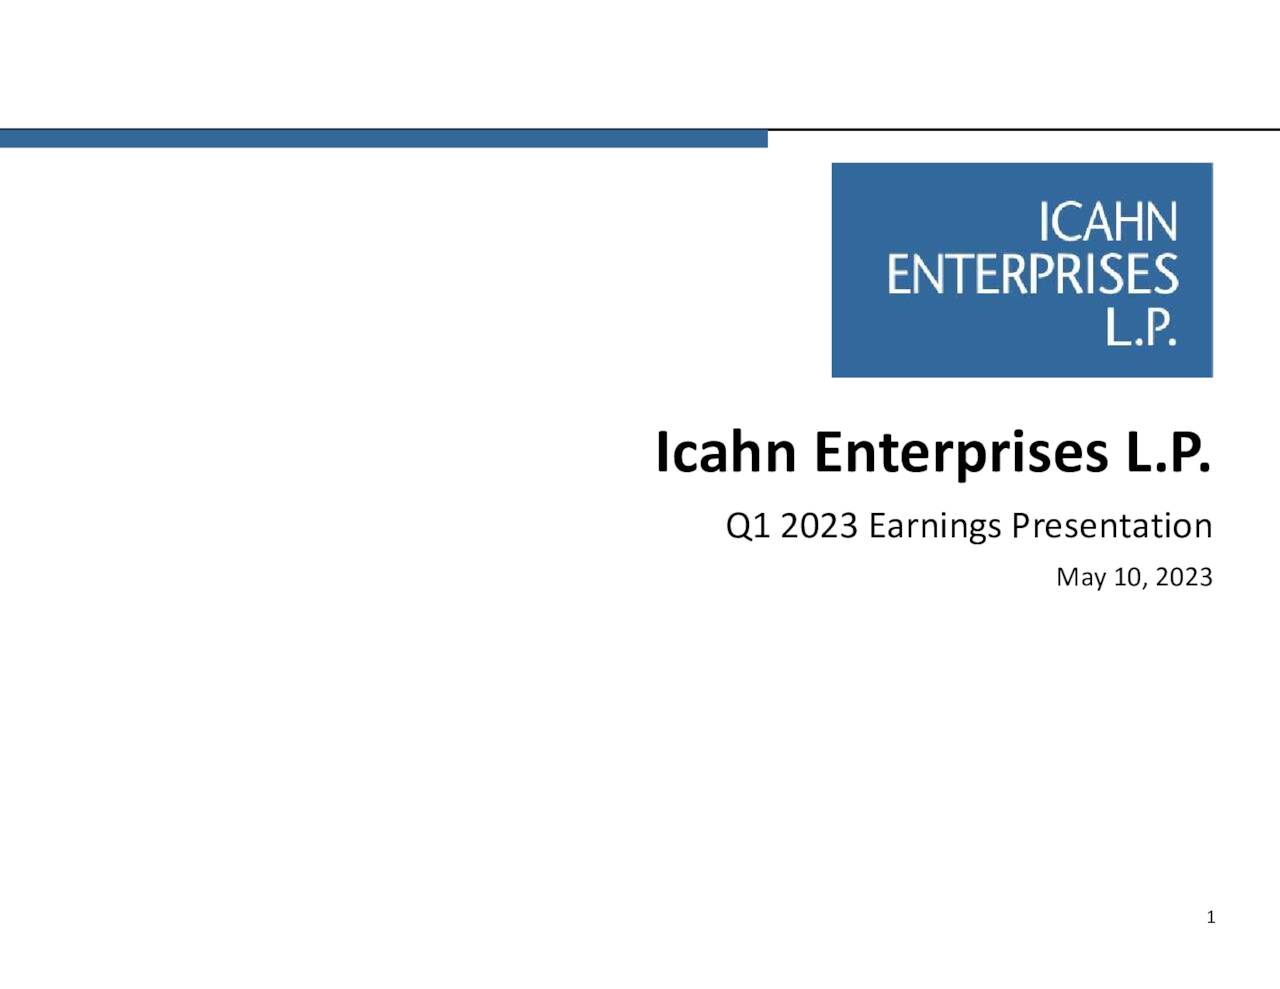 Icahn Enterprises Lp 2023 Q1 Results Earnings Call Presentation Nasdaqiep Seeking Alpha 2760